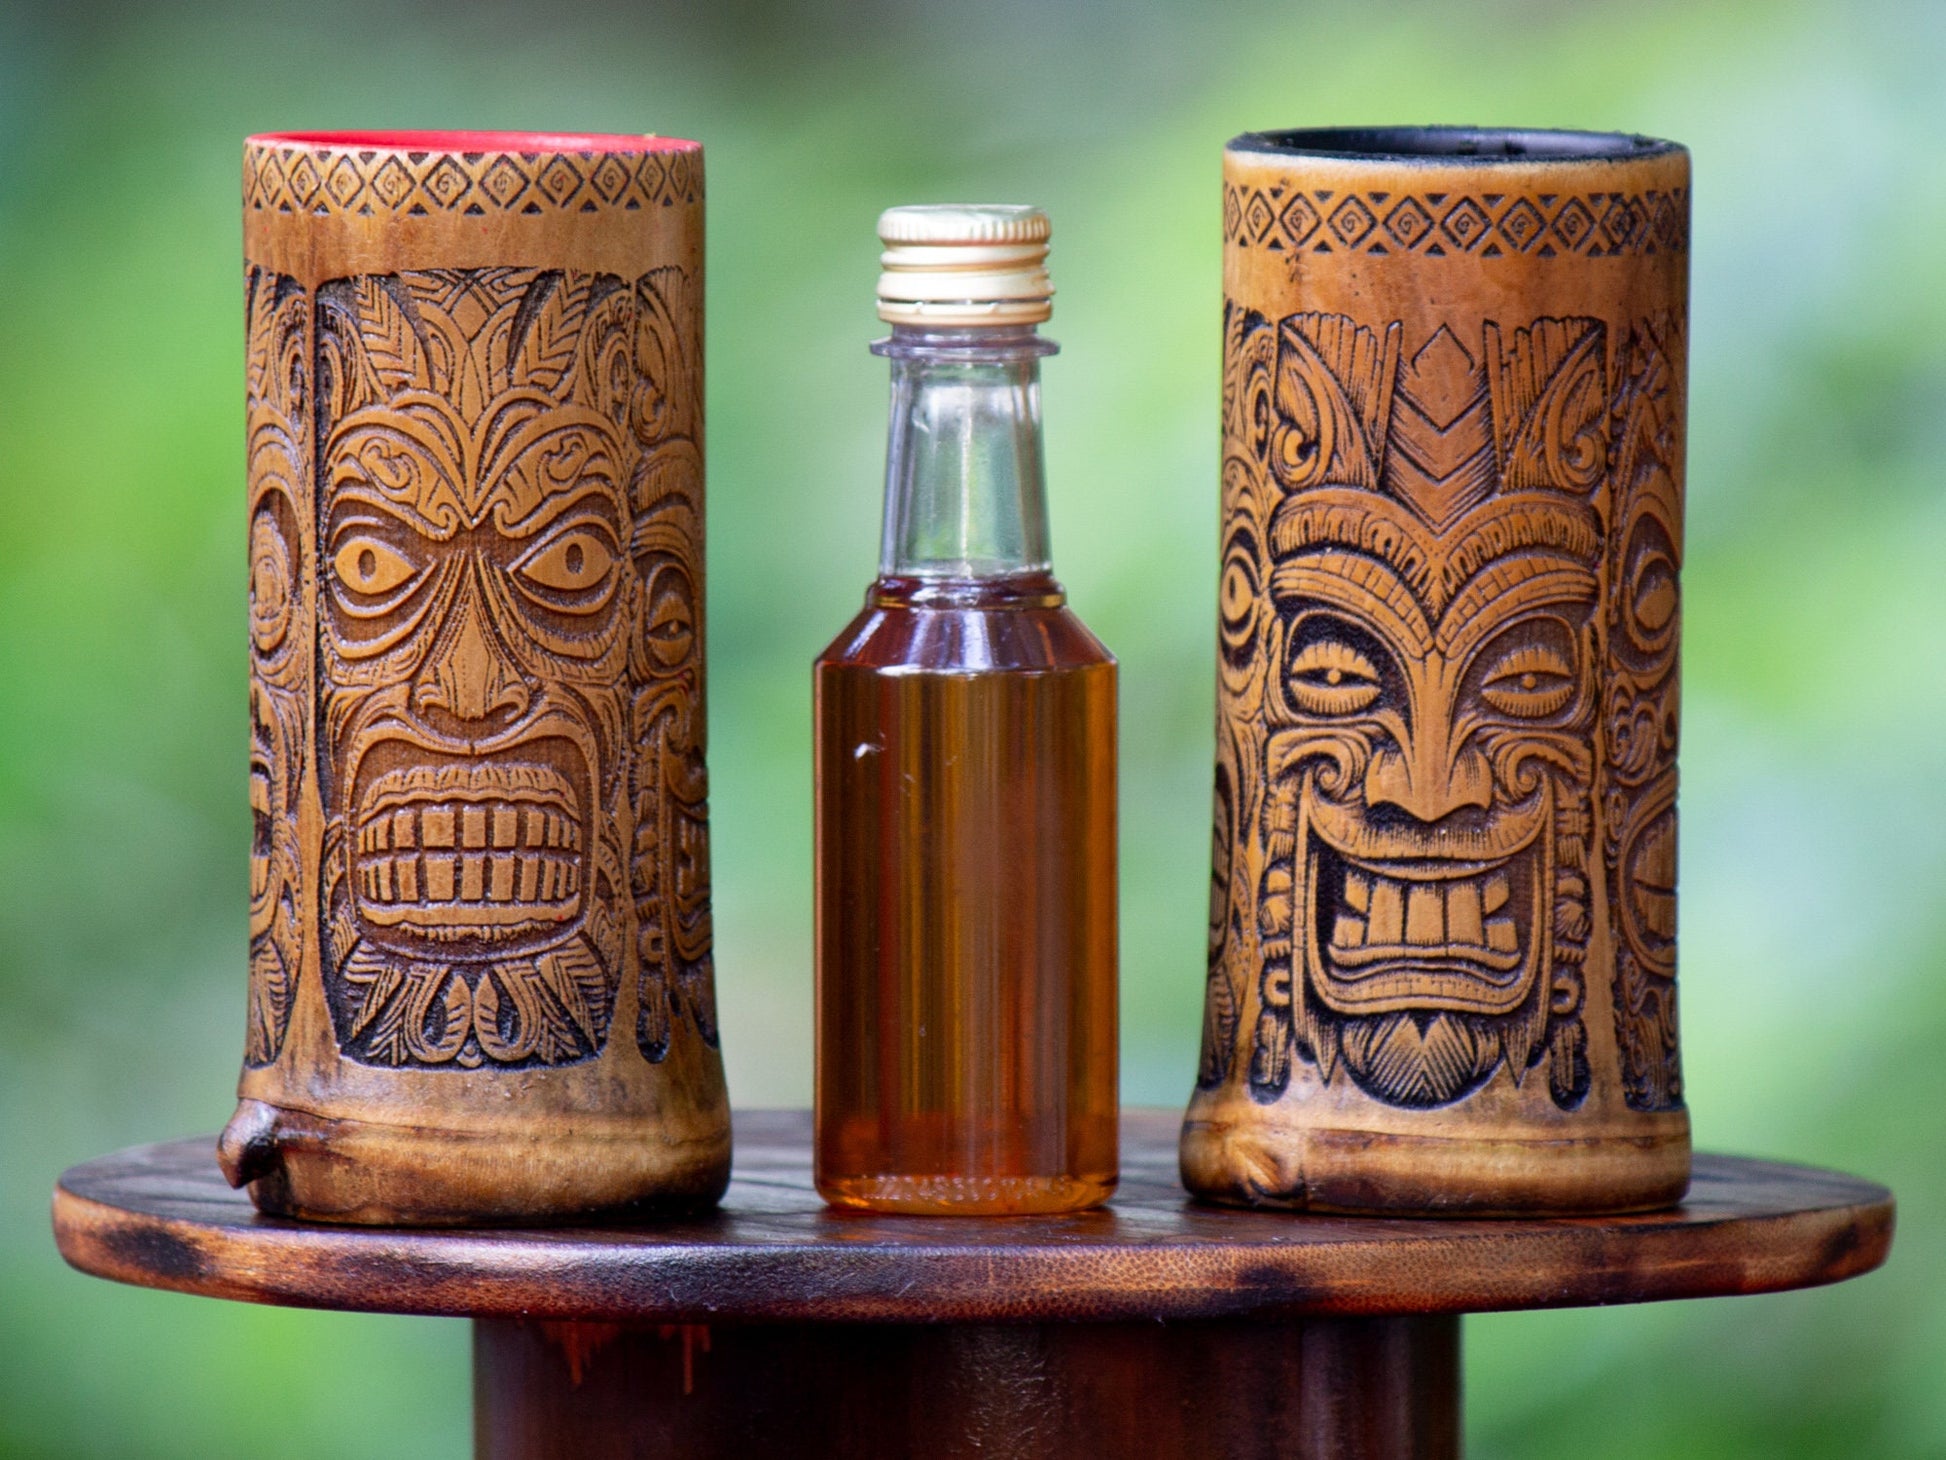 Bamboo Design Drinking Glasses, Set of 4, Cold Drinks, Tiki Bar